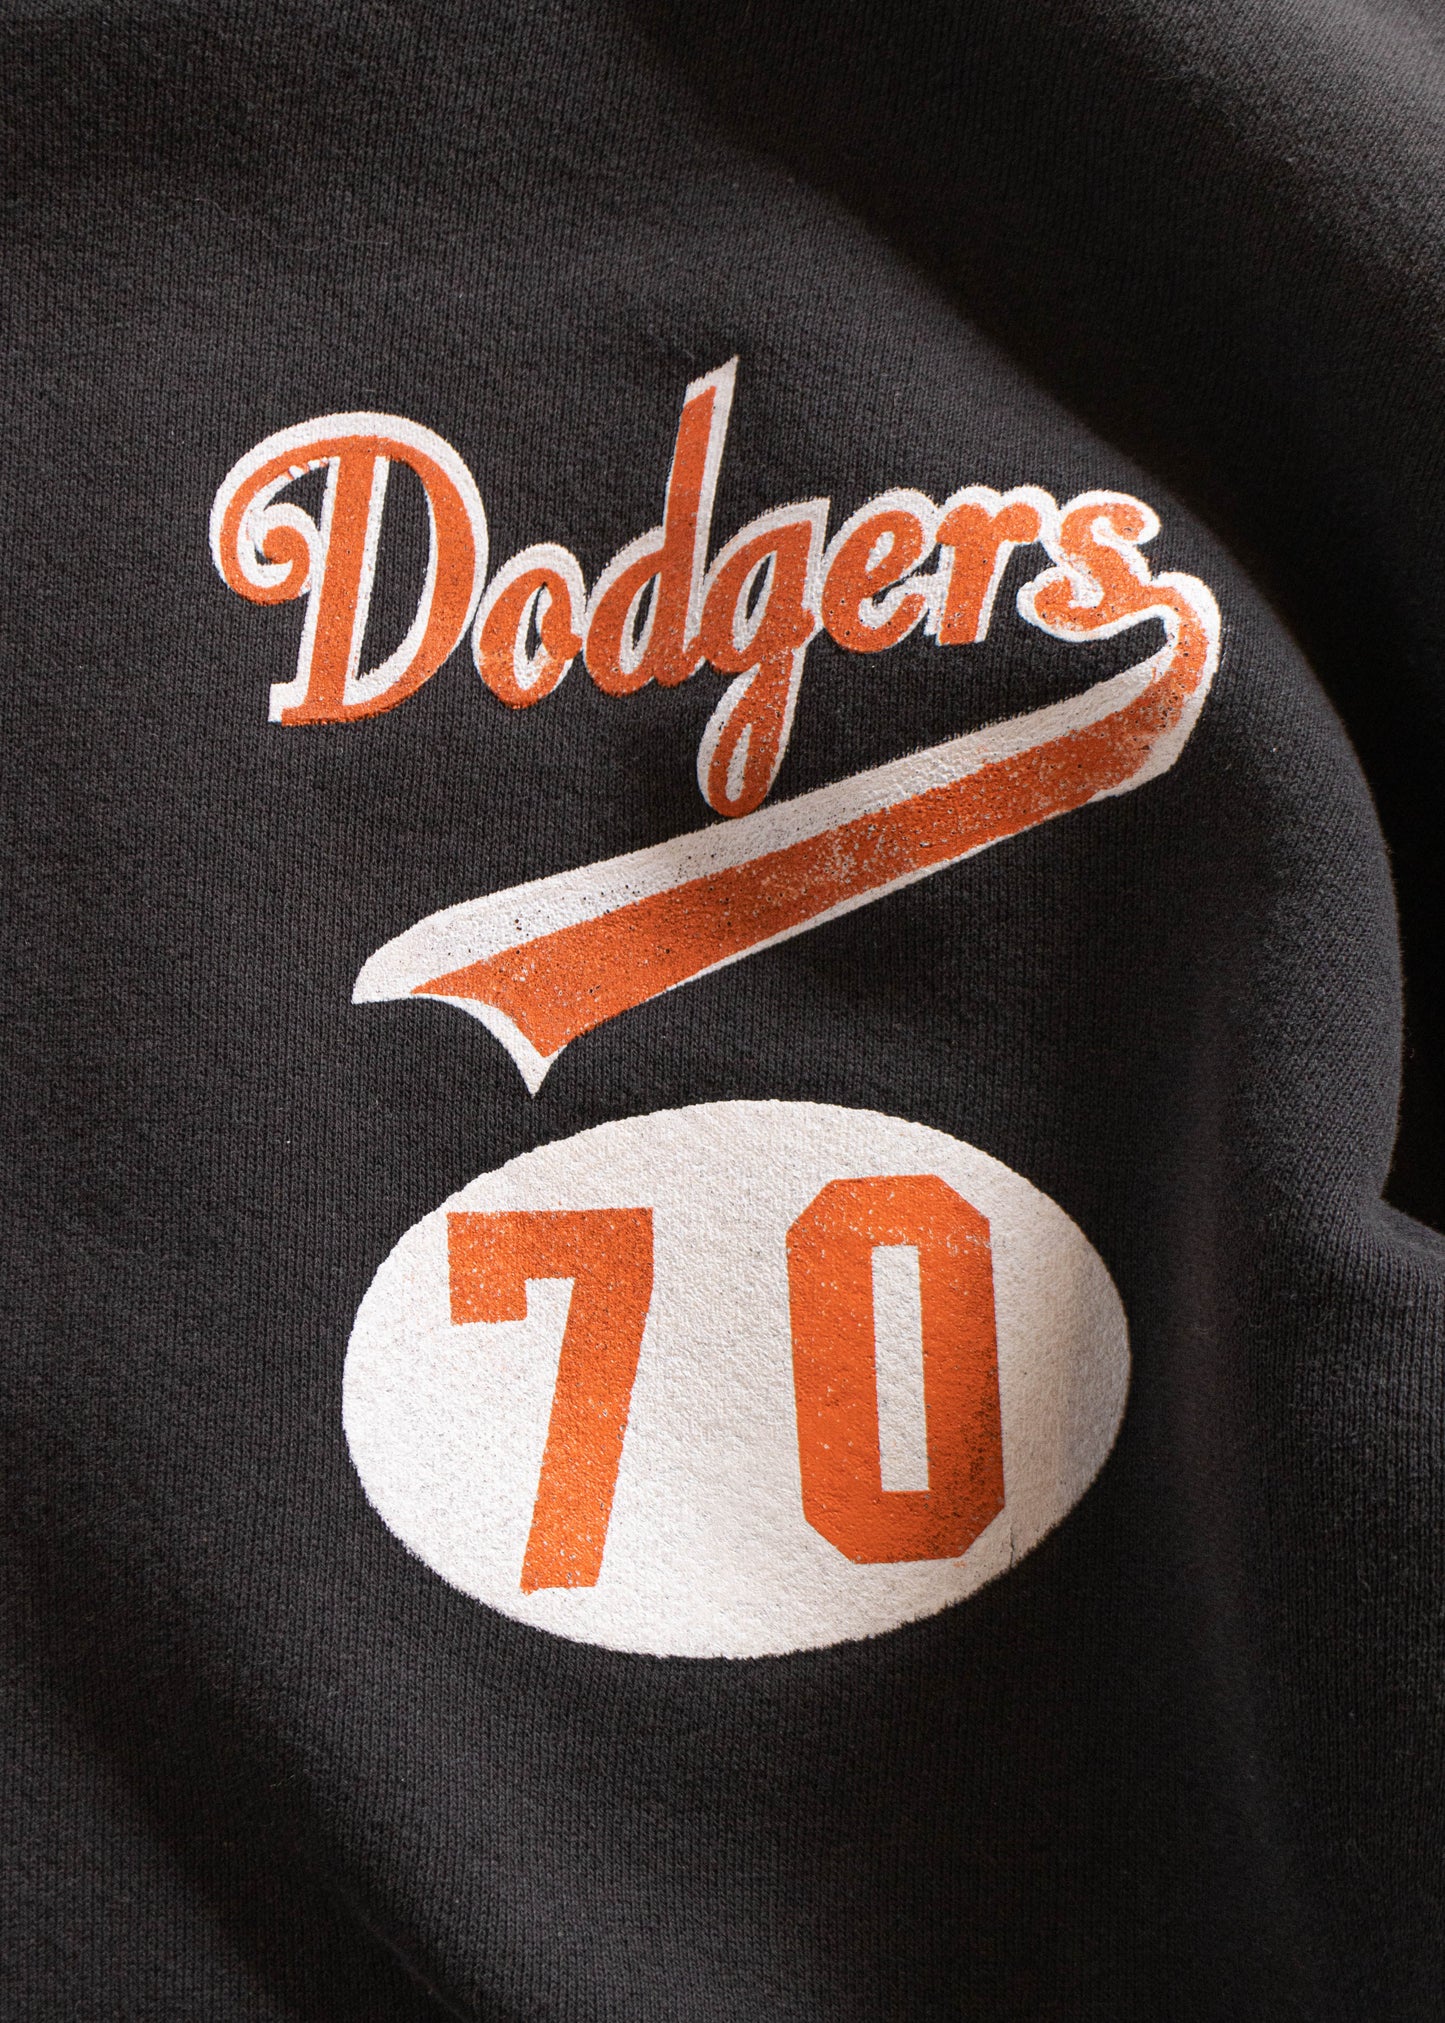 1980s Los Angeles Dodgers Hoodie Size M/L